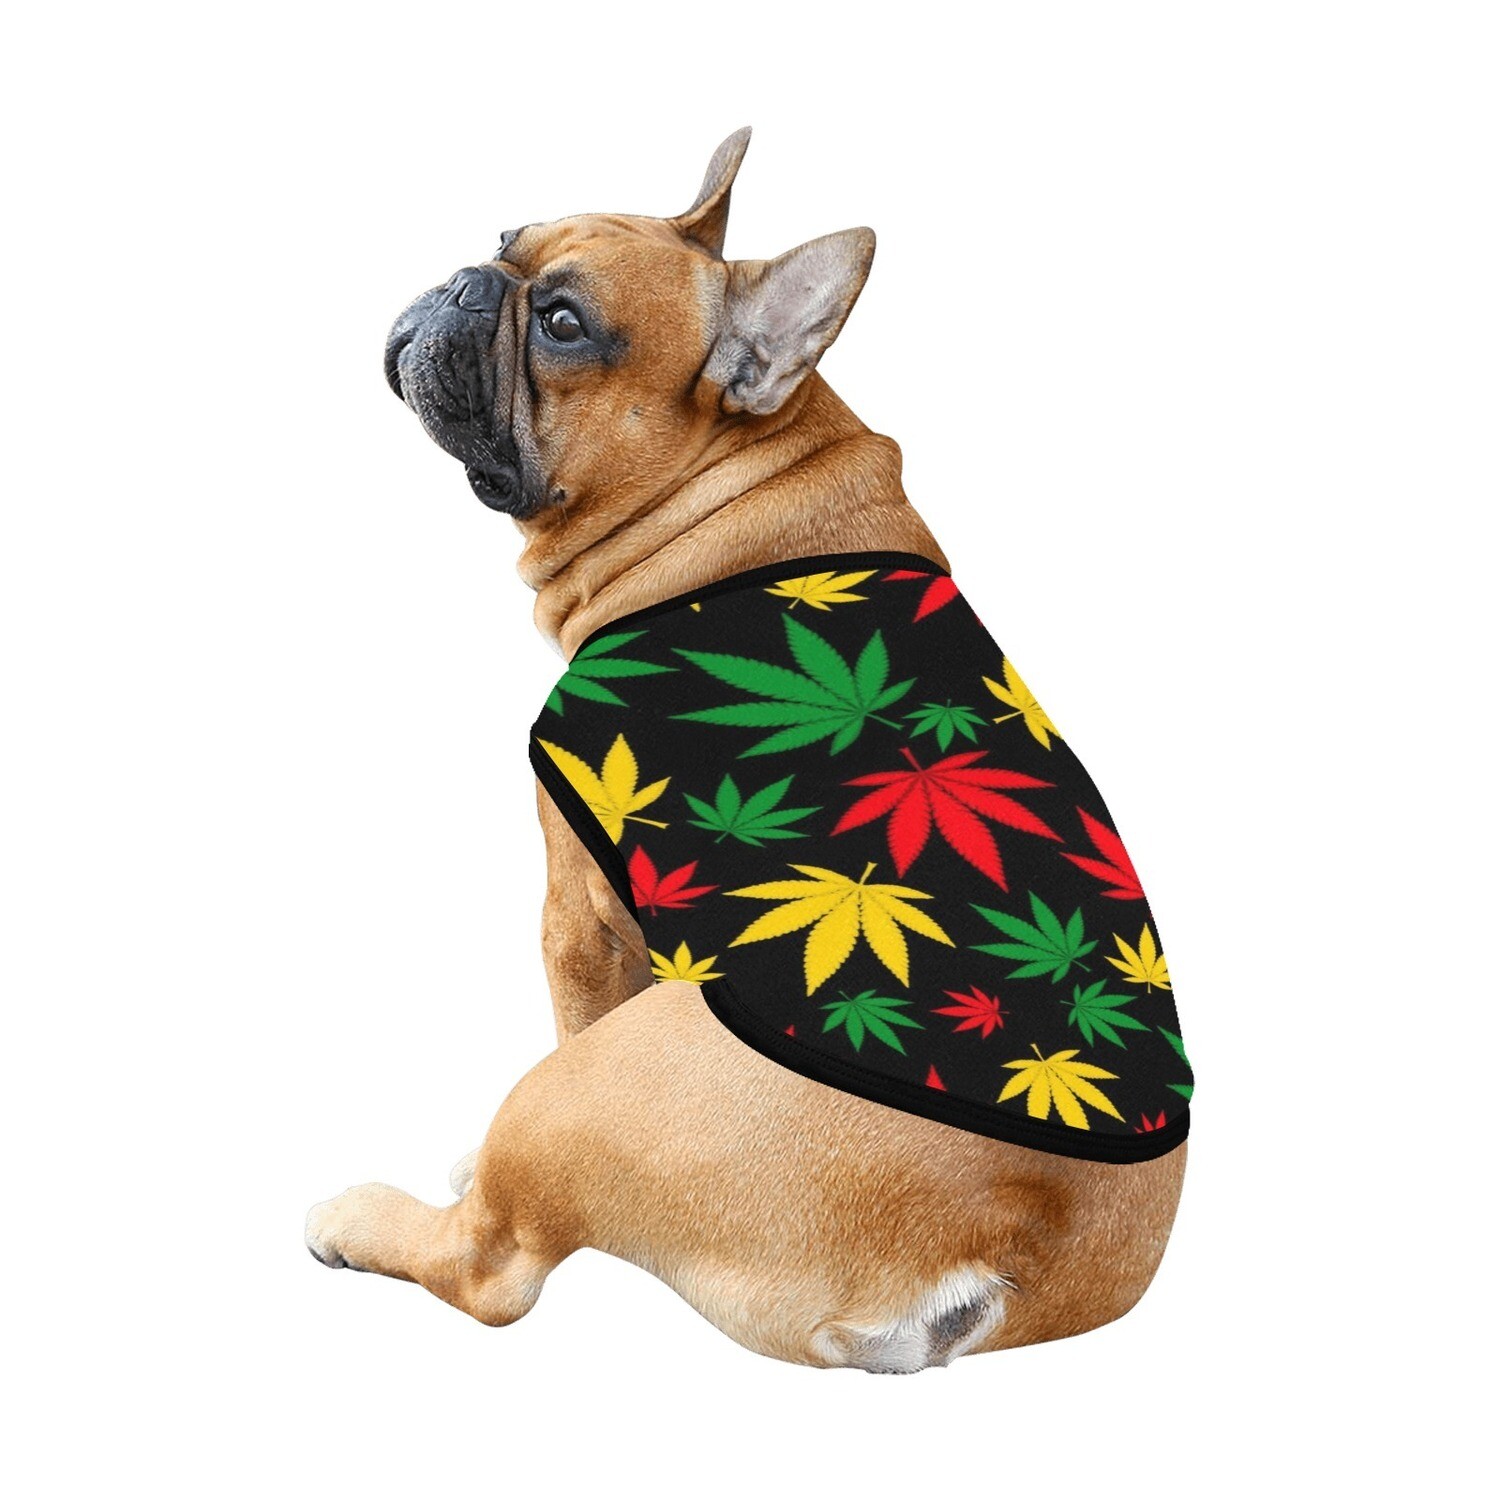 🐕 Dog t-shirt, dog shirt, dog clothes, dog tank top, dog gift, dog costume, 7 sizes XS to 3XL, gift, marijuana, cannabis, weed, leaves, rasta